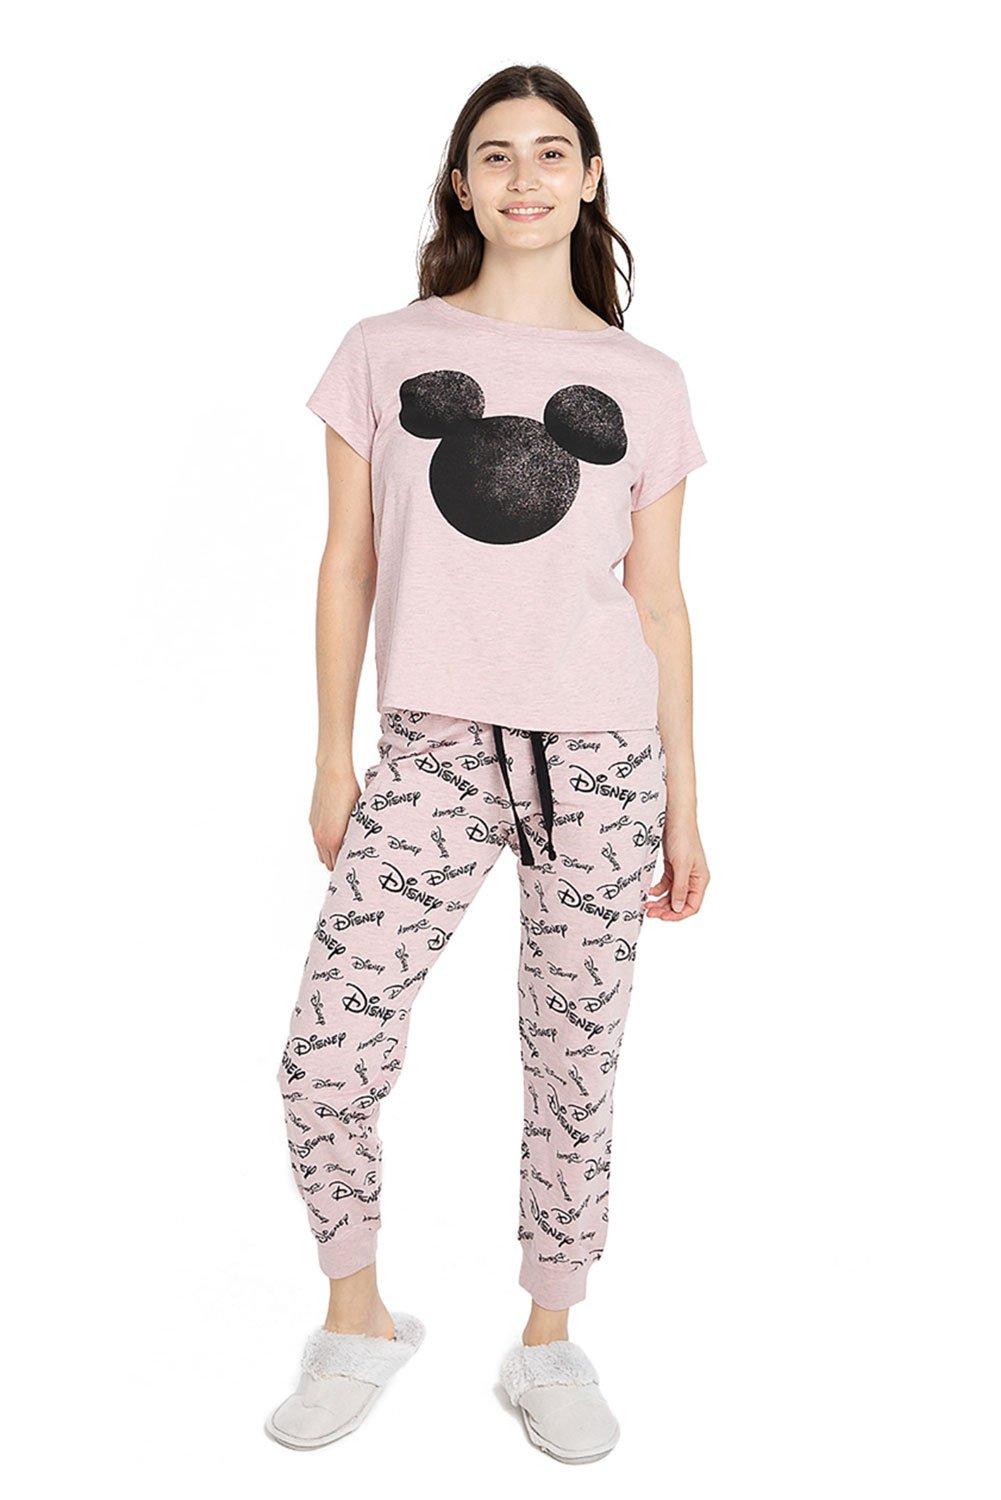 Mickey Mouse Silhouette Cotton PJ Set